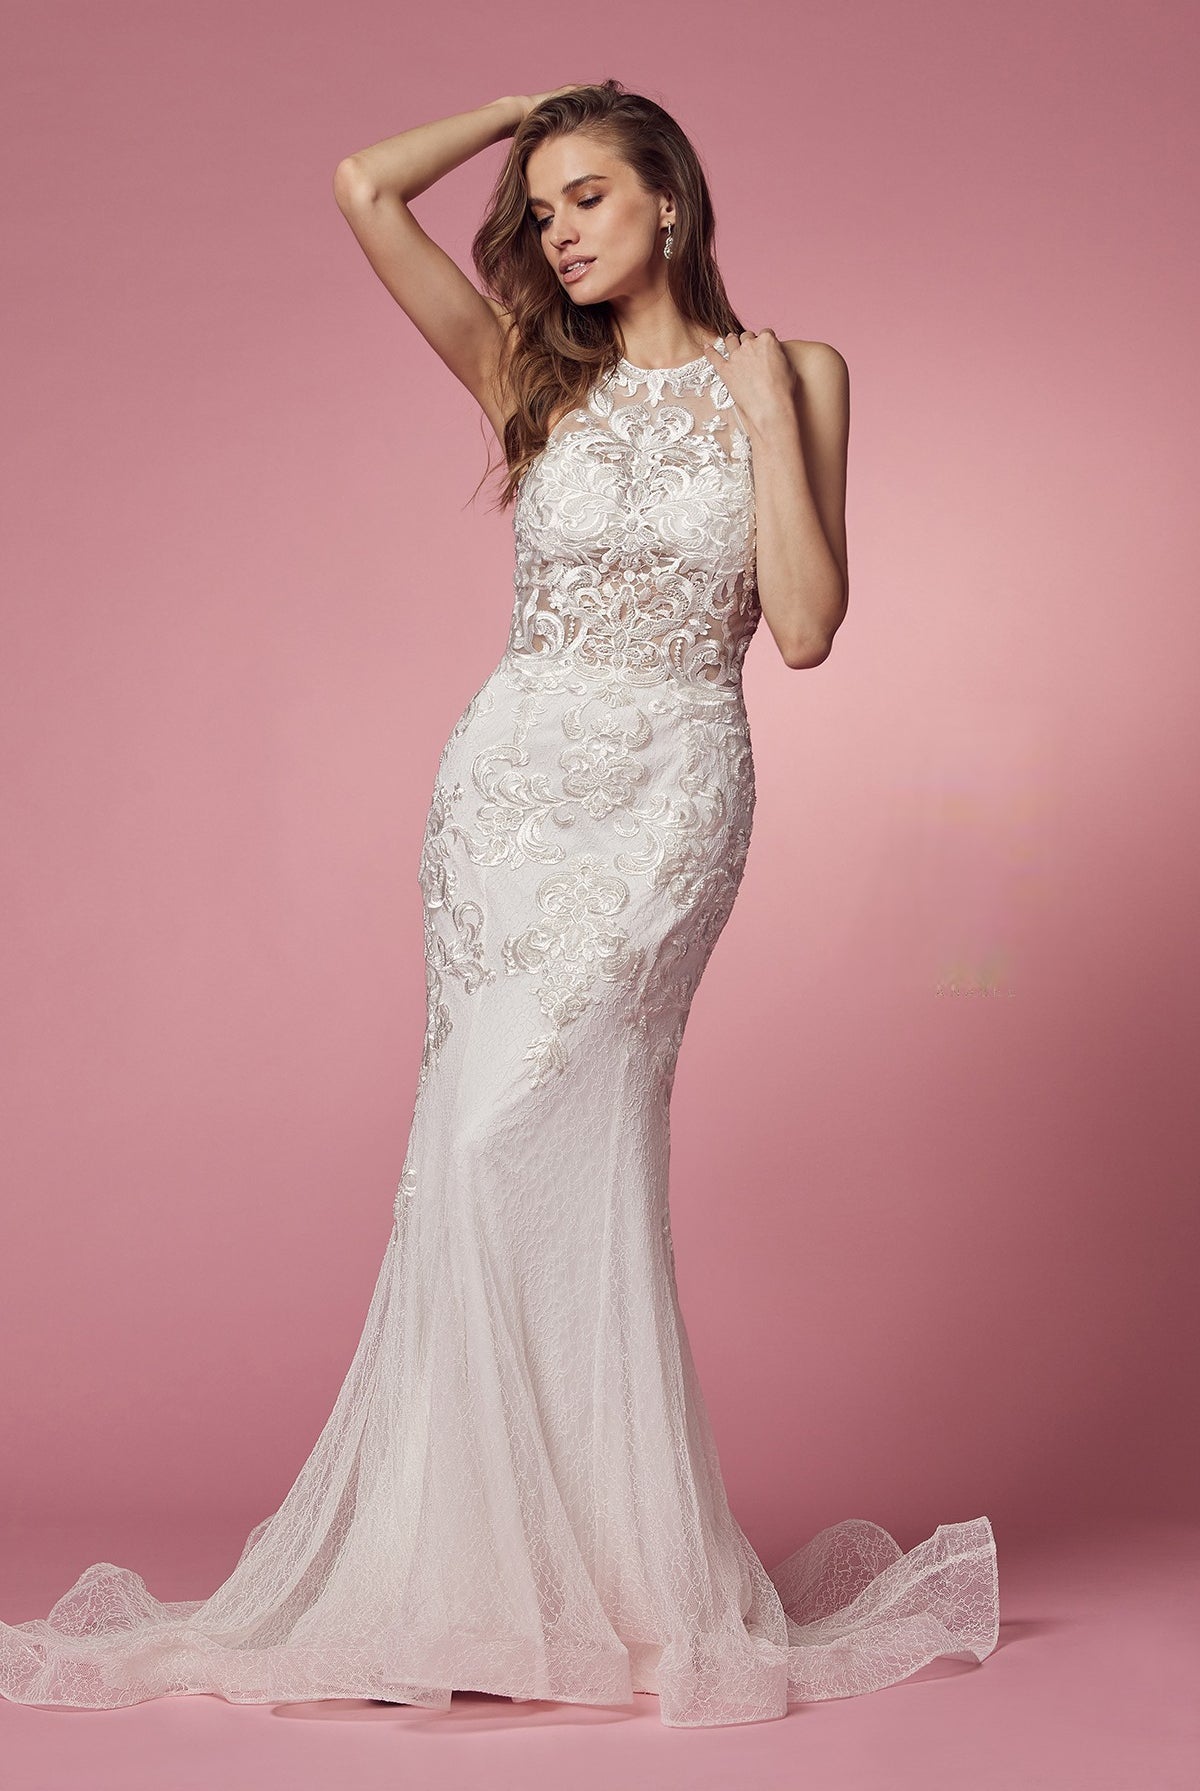 Embroidered Lace Mermaid High Neck Sheer Bodice Plus Size Long Wedding Dress NXW901P-Wedding Dress-smcfashion.com